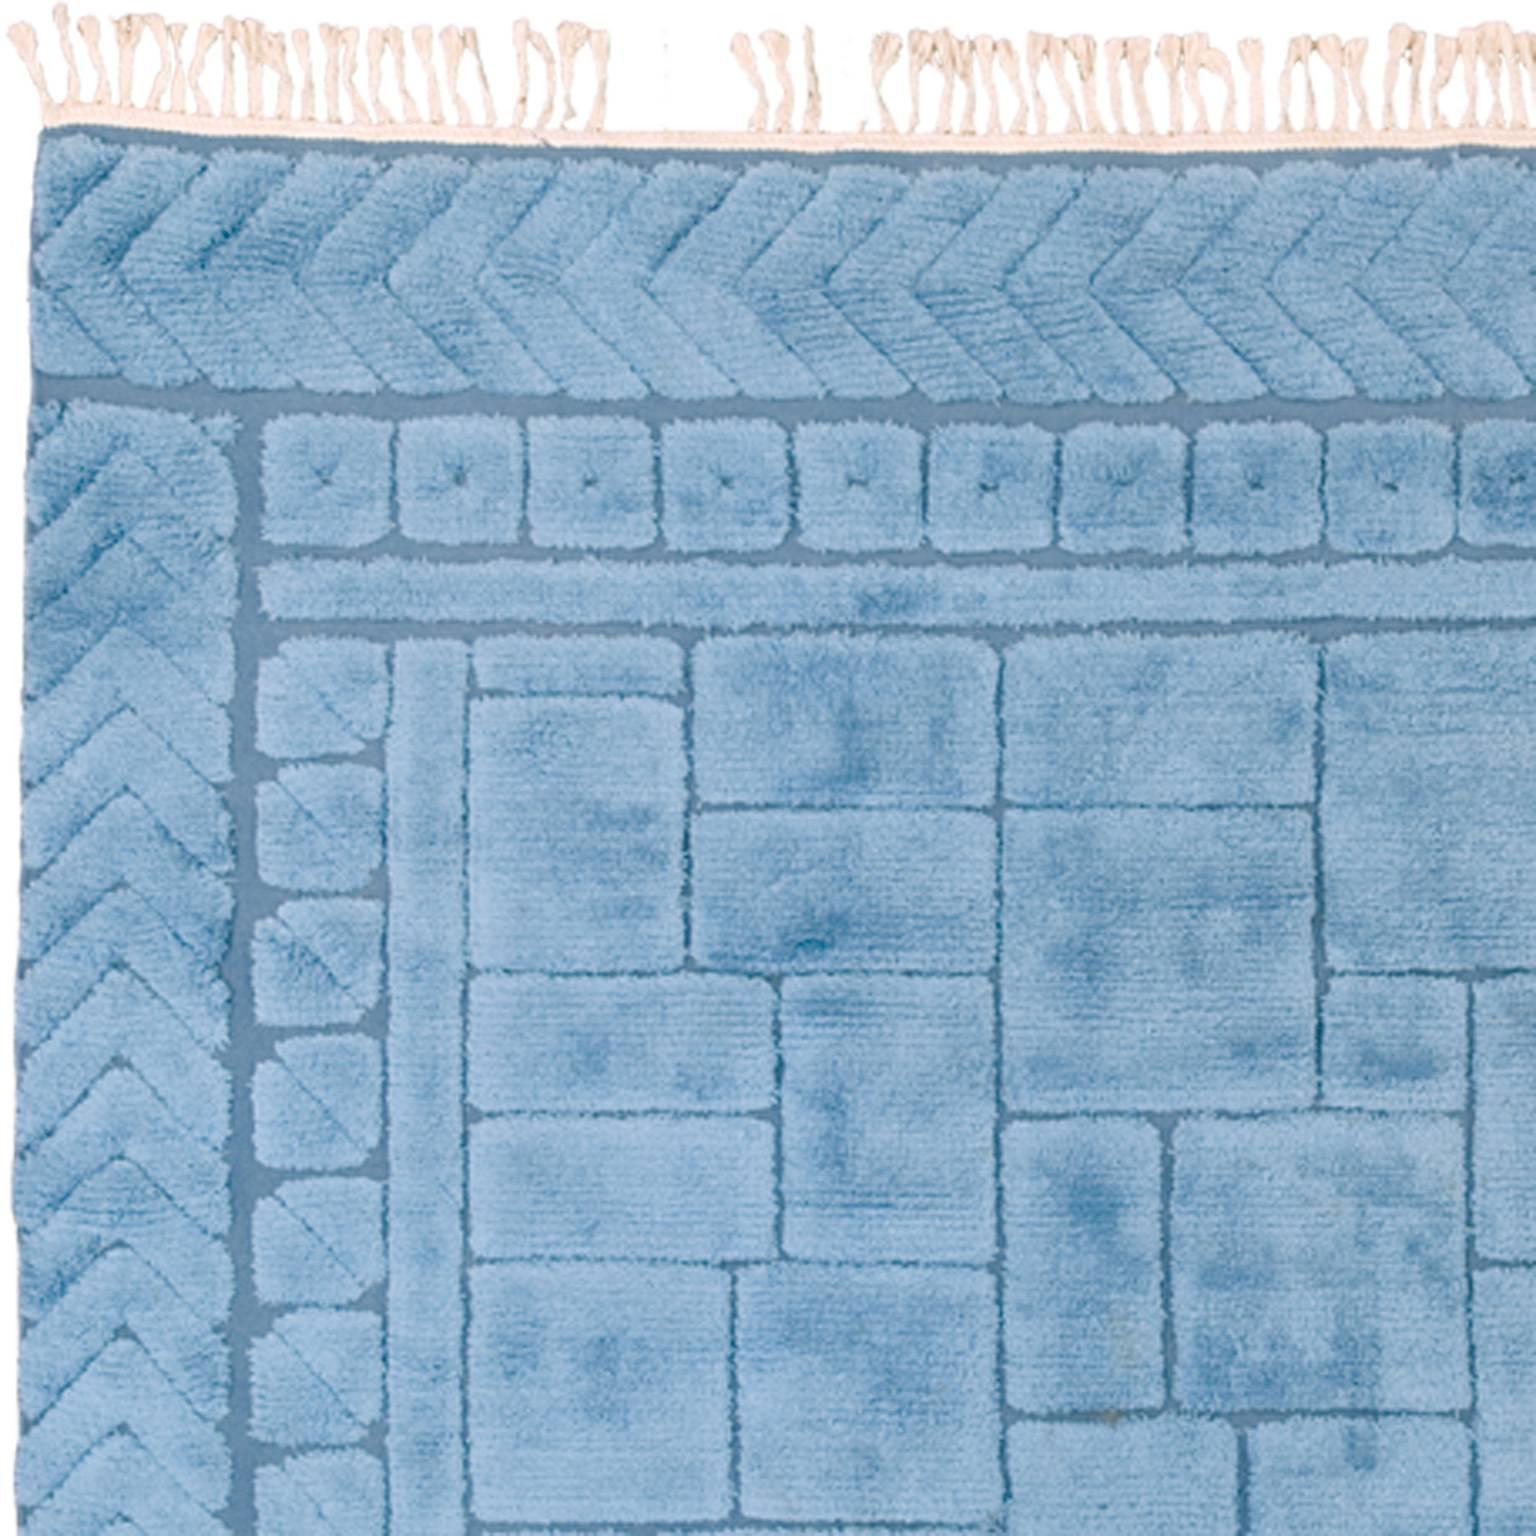 Mid-20th century Swedish pile carpet
Sweden ca. 1950
initialed 'IHK' (Ingrid Hellman - Knafve).
17'7